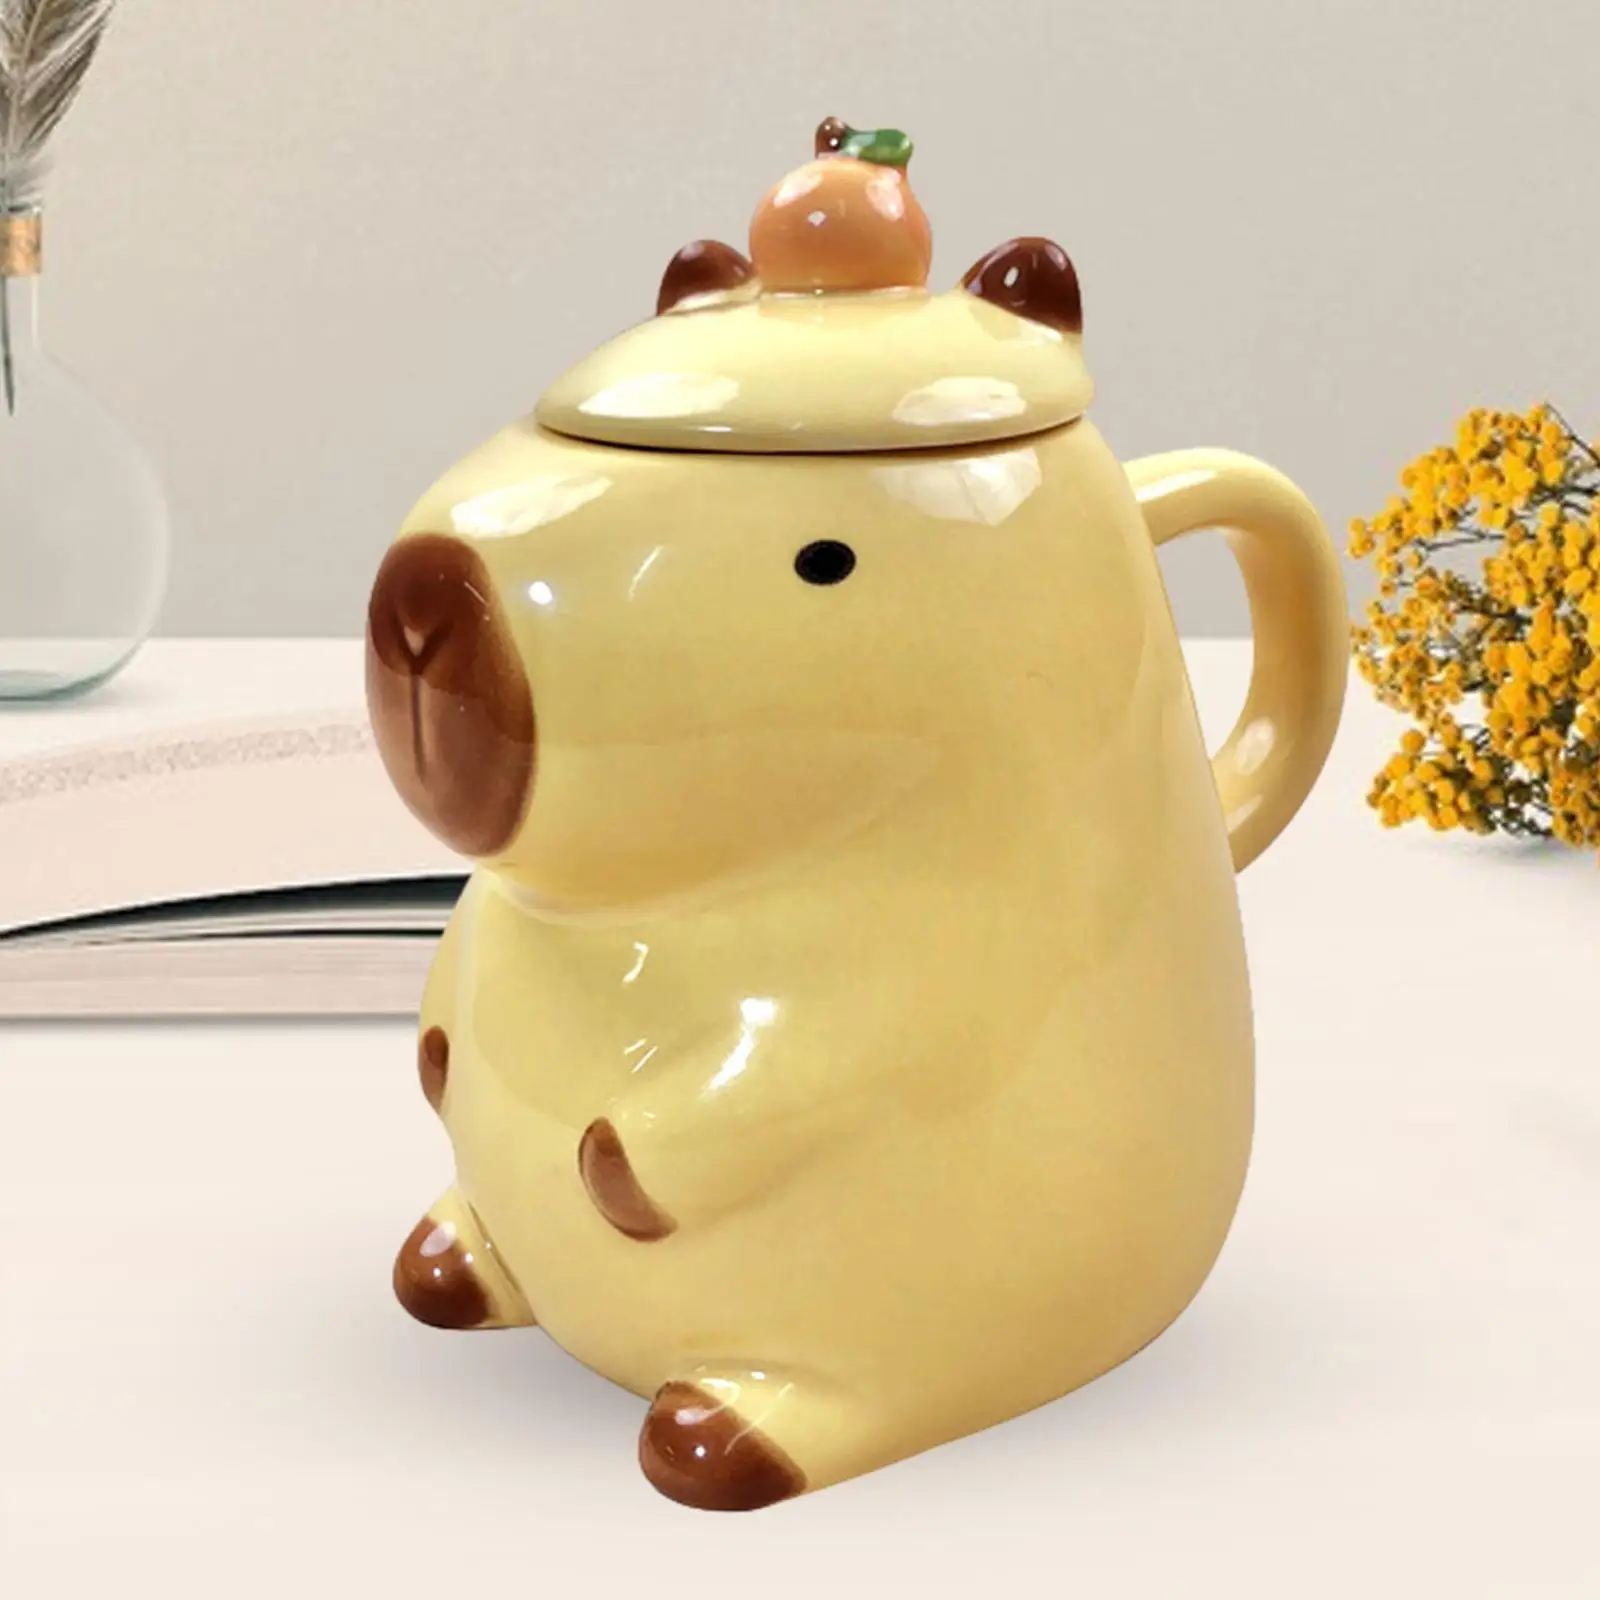 Cartoon Capybara Teacup Tableware for Adults Tea Mug Christmas Gift Milk Mug for Thanksgiving Desk Favors Parties Women, Men